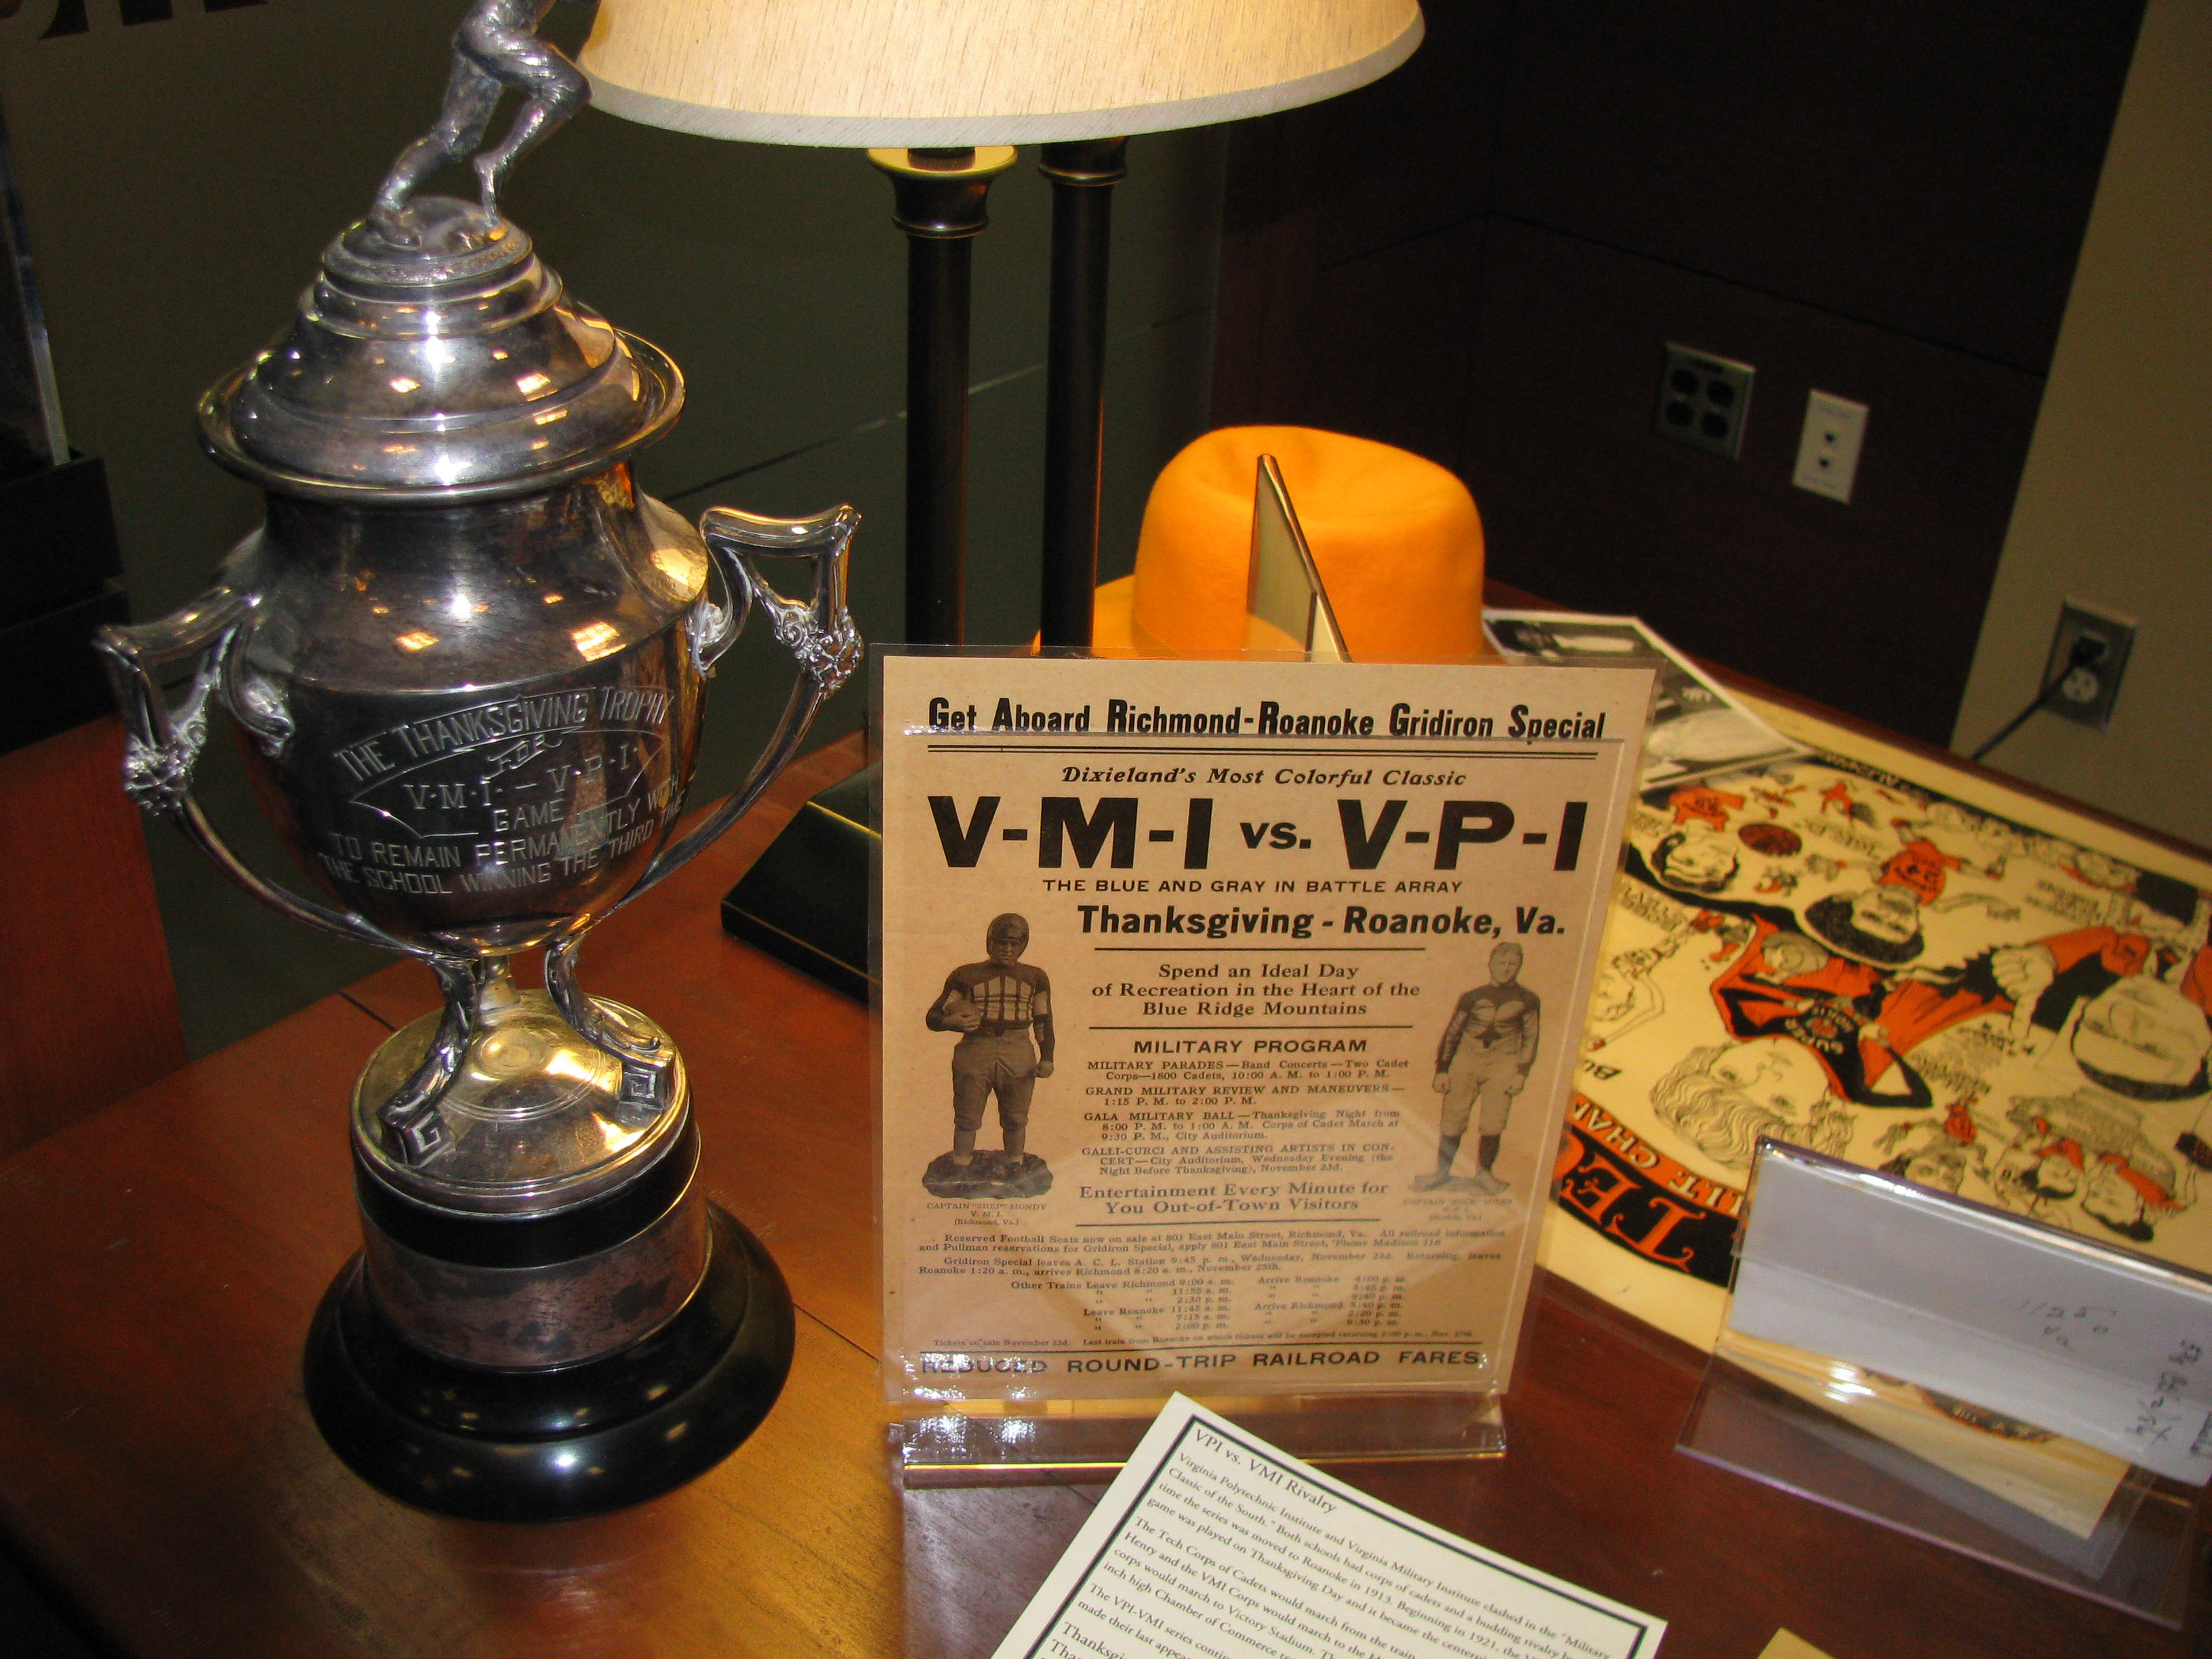 House Displays Rare Treasures, Virginia Tech Table Lamps